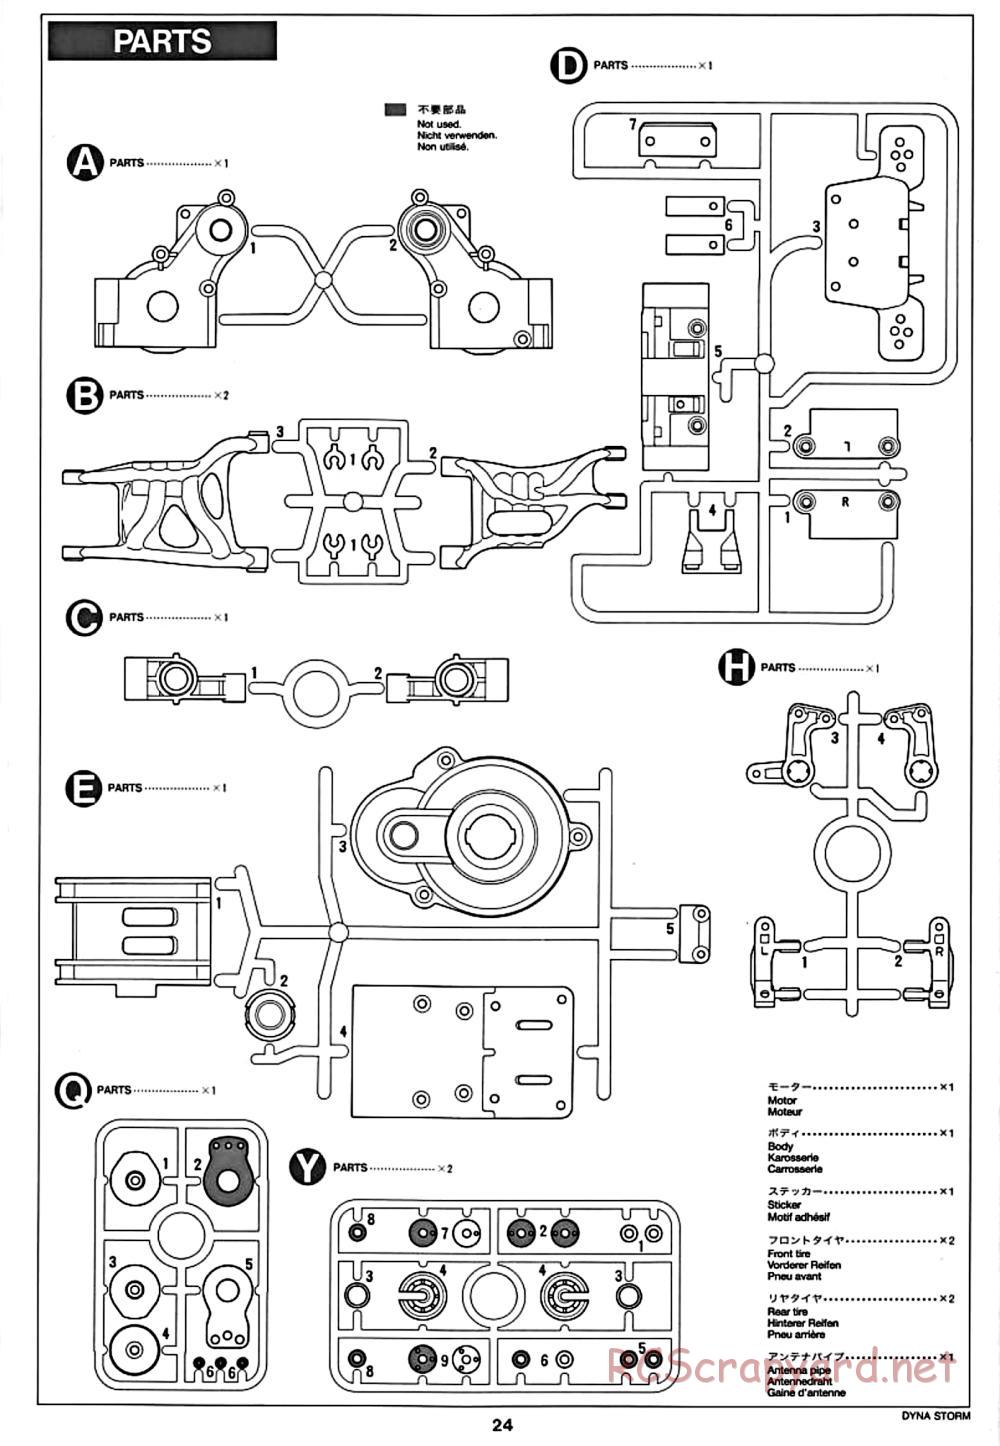 Tamiya - Dyna Storm Chassis - Manual - Page 24